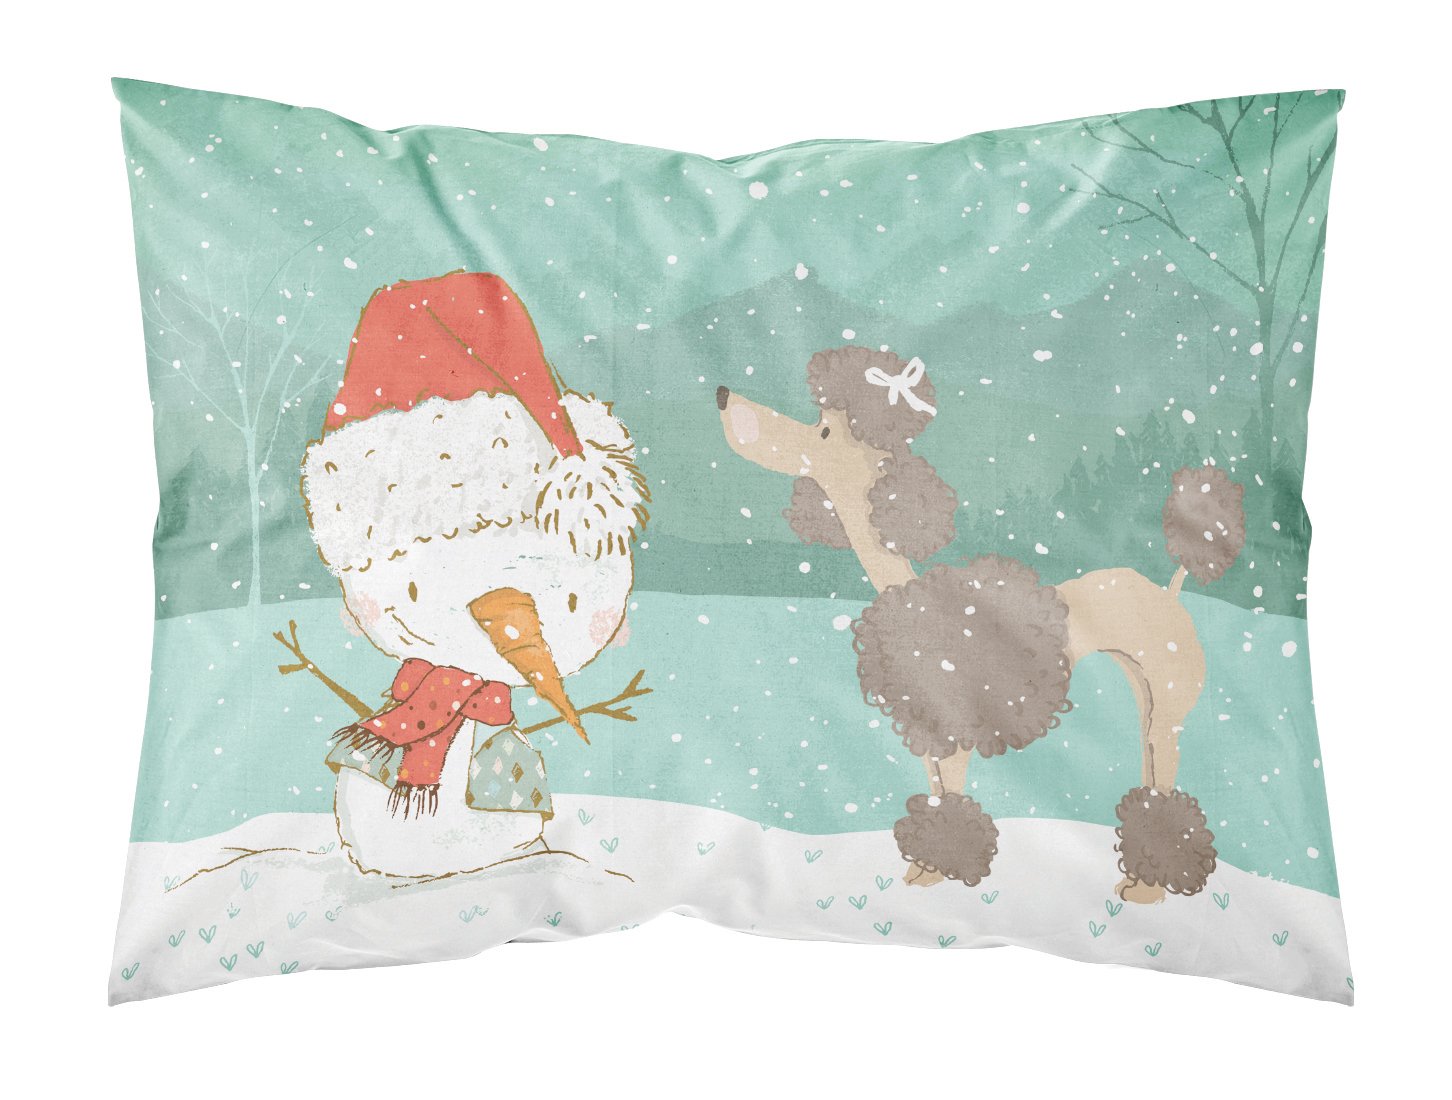 Chocolate Poodle Snowman Christmas Fabric Standard Pillowcase CK2065PILLOWCASE by Caroline's Treasures